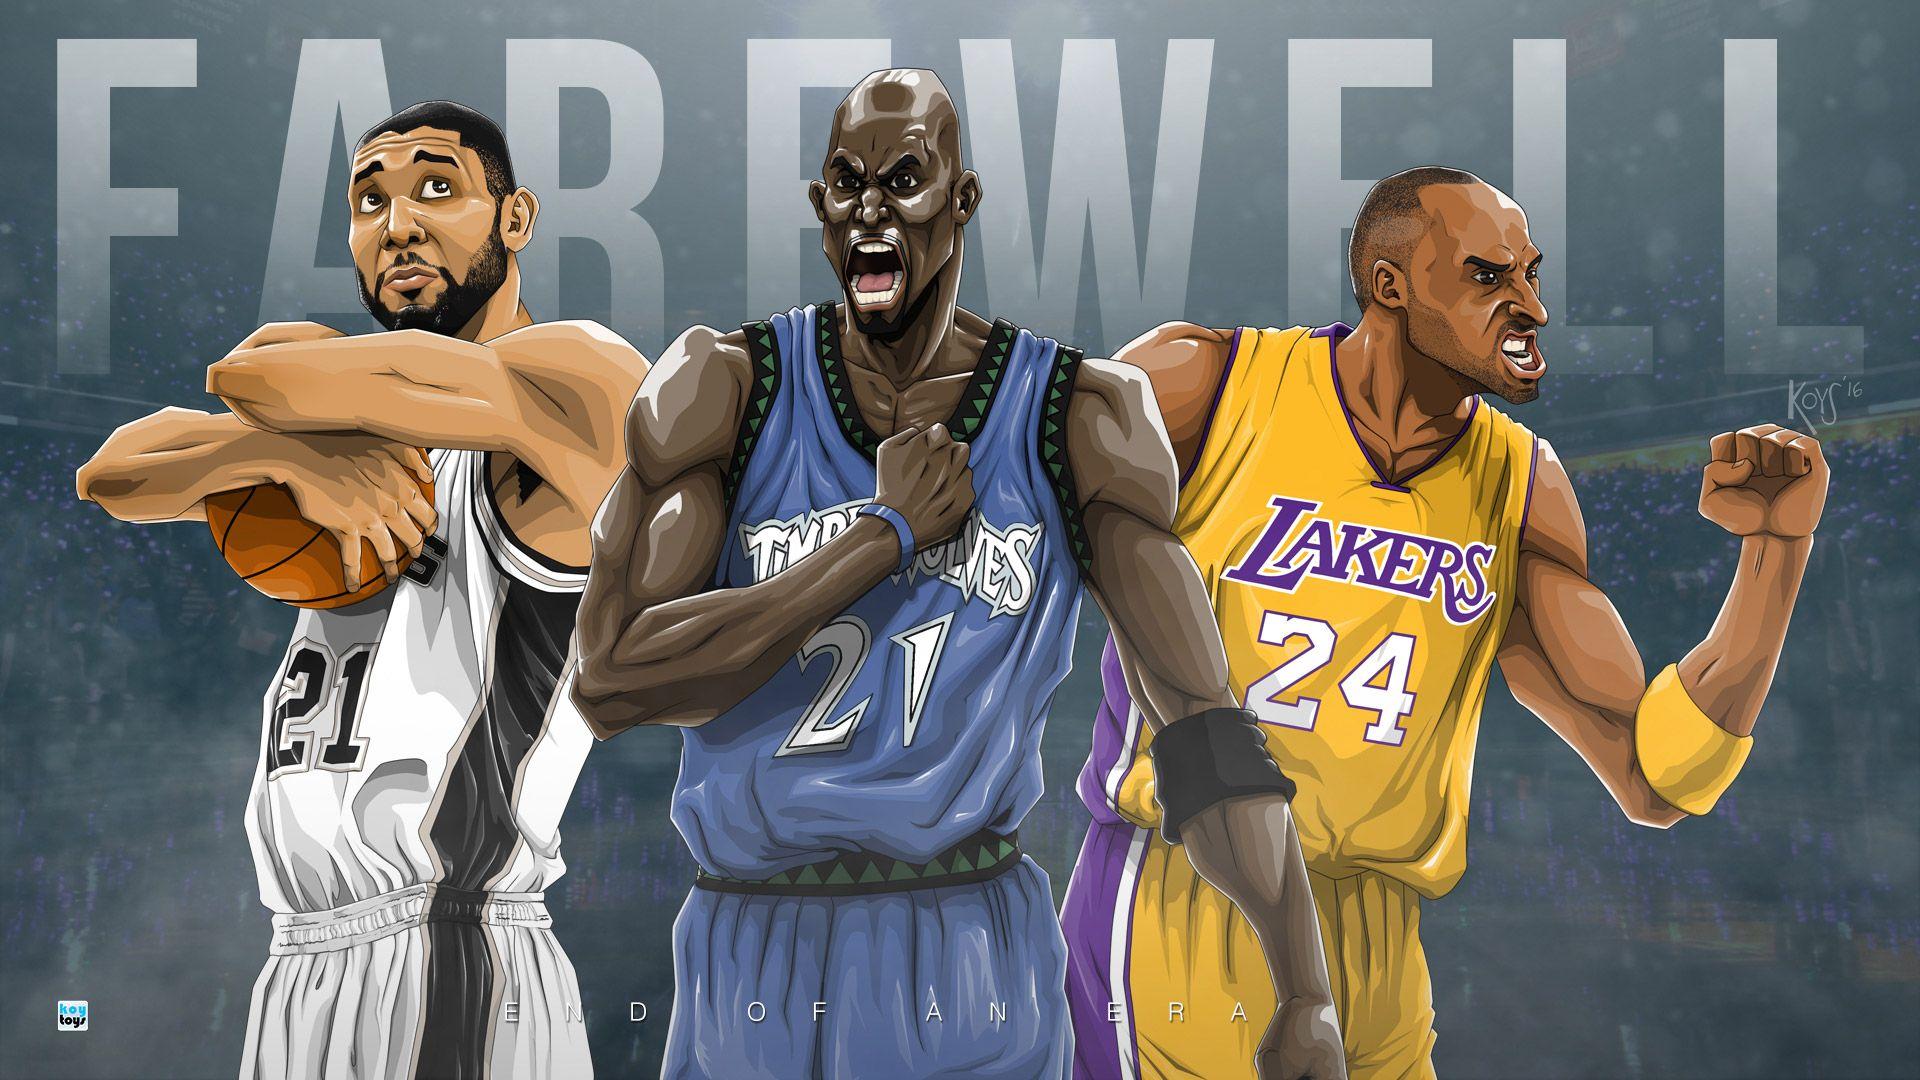 Kobe Bryant Wallpaper. Basketball Wallpaper at